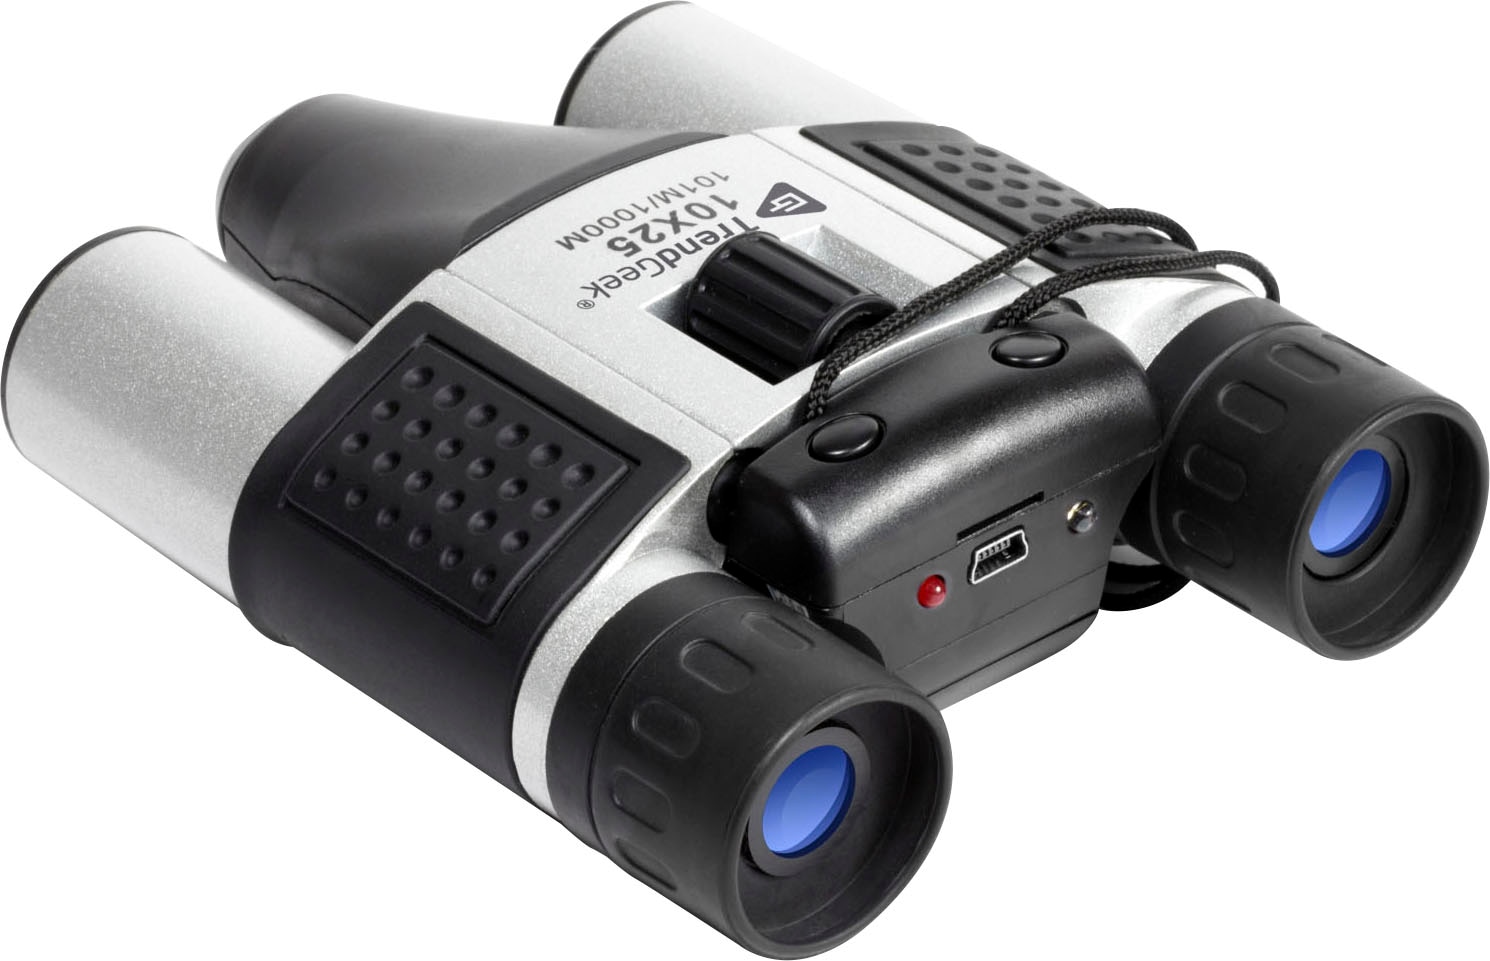 Technaxx integrierter | Digitalkamera »TrendGeek 10x25« BAUR mit TG-125 Fernglas